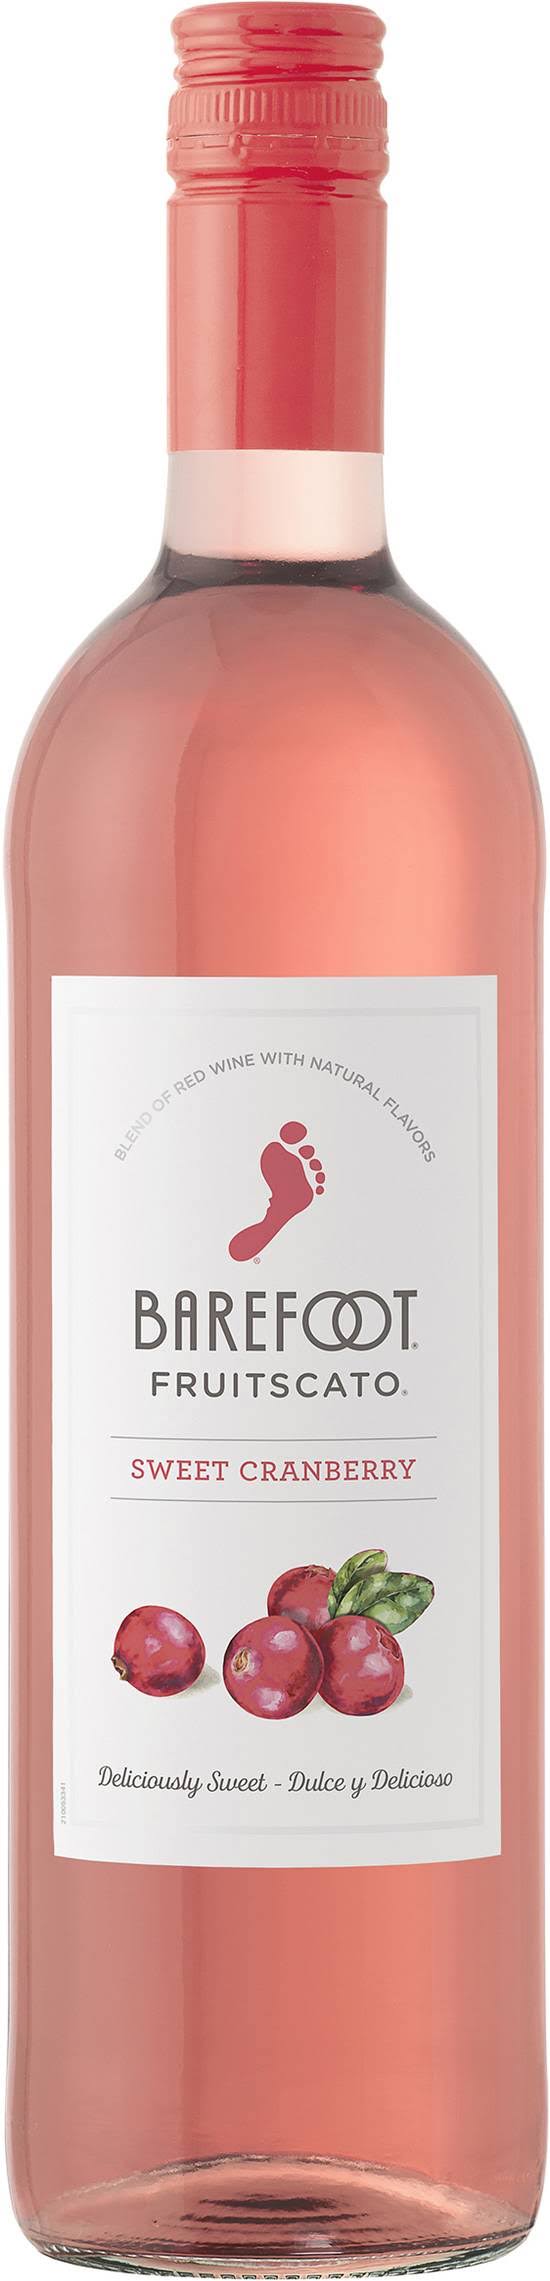 Barefoot - Sweet Cranberry Fruitscato (750ml)